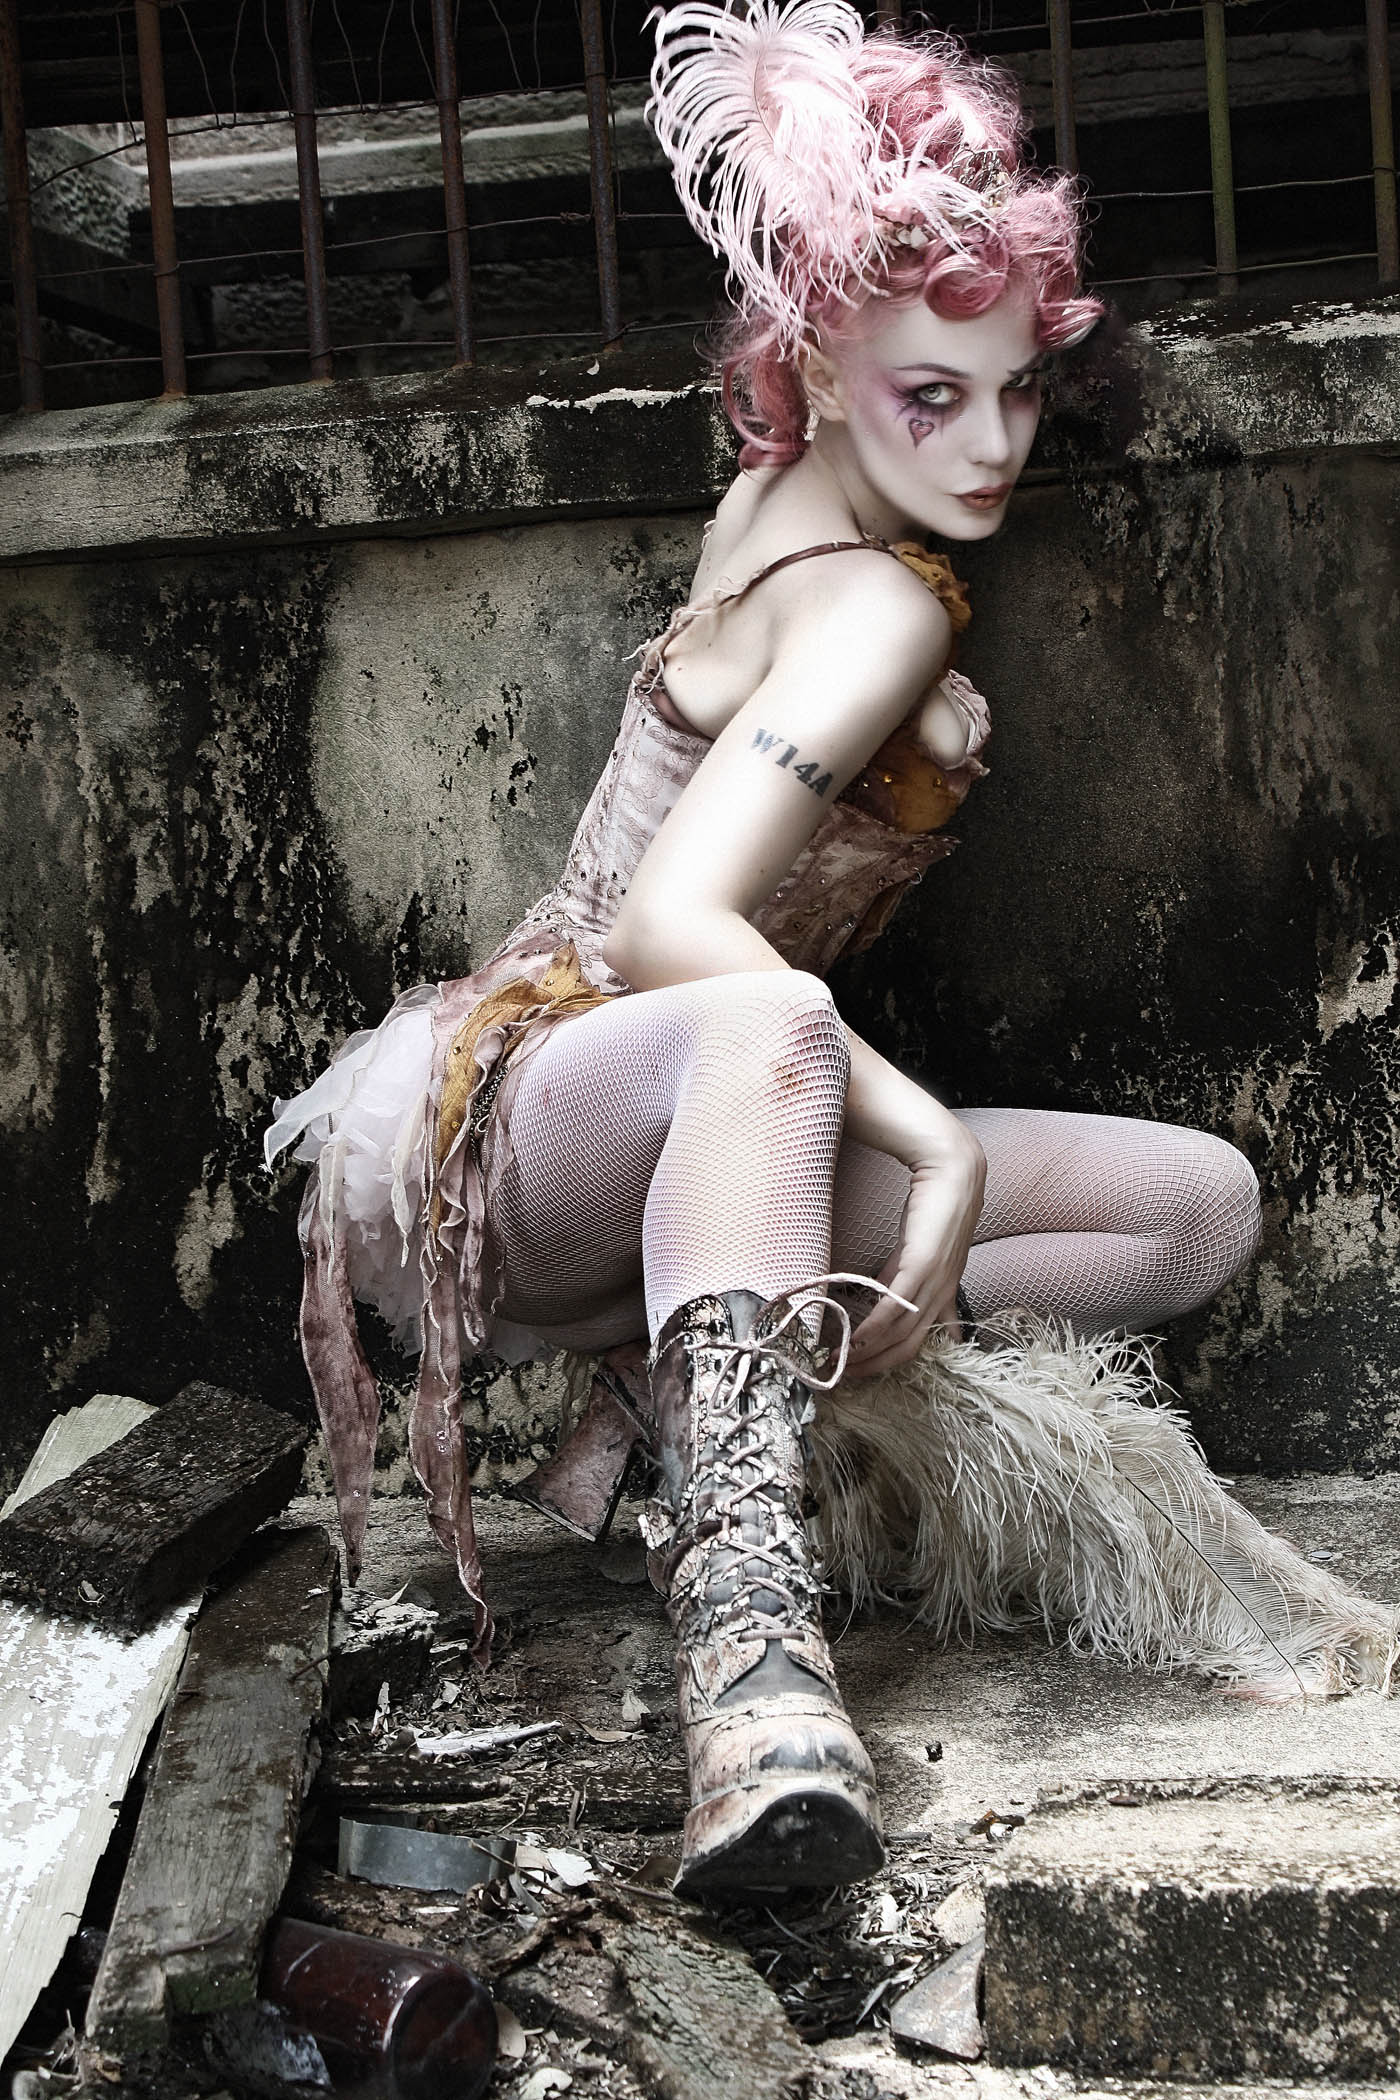 Emilie Autumn by Melissa King